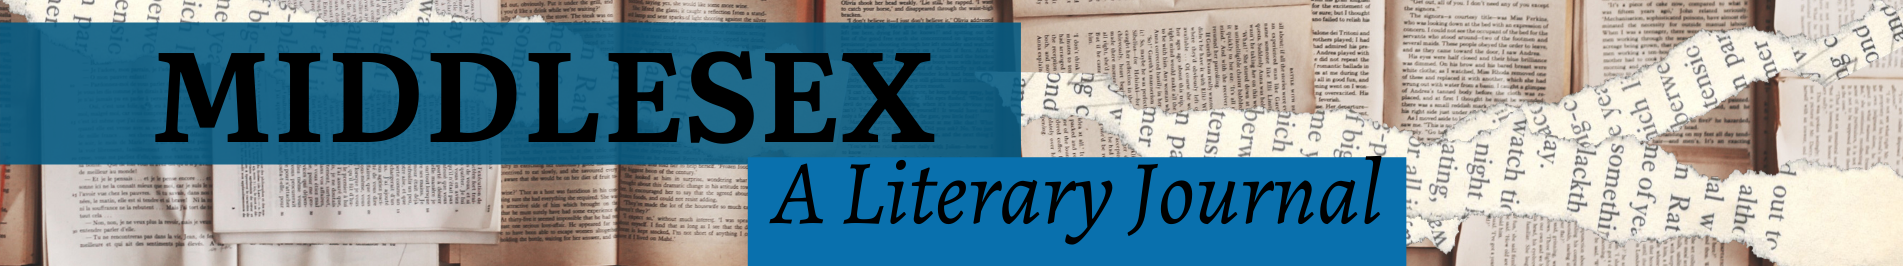 Middlesex: A Literary Journal